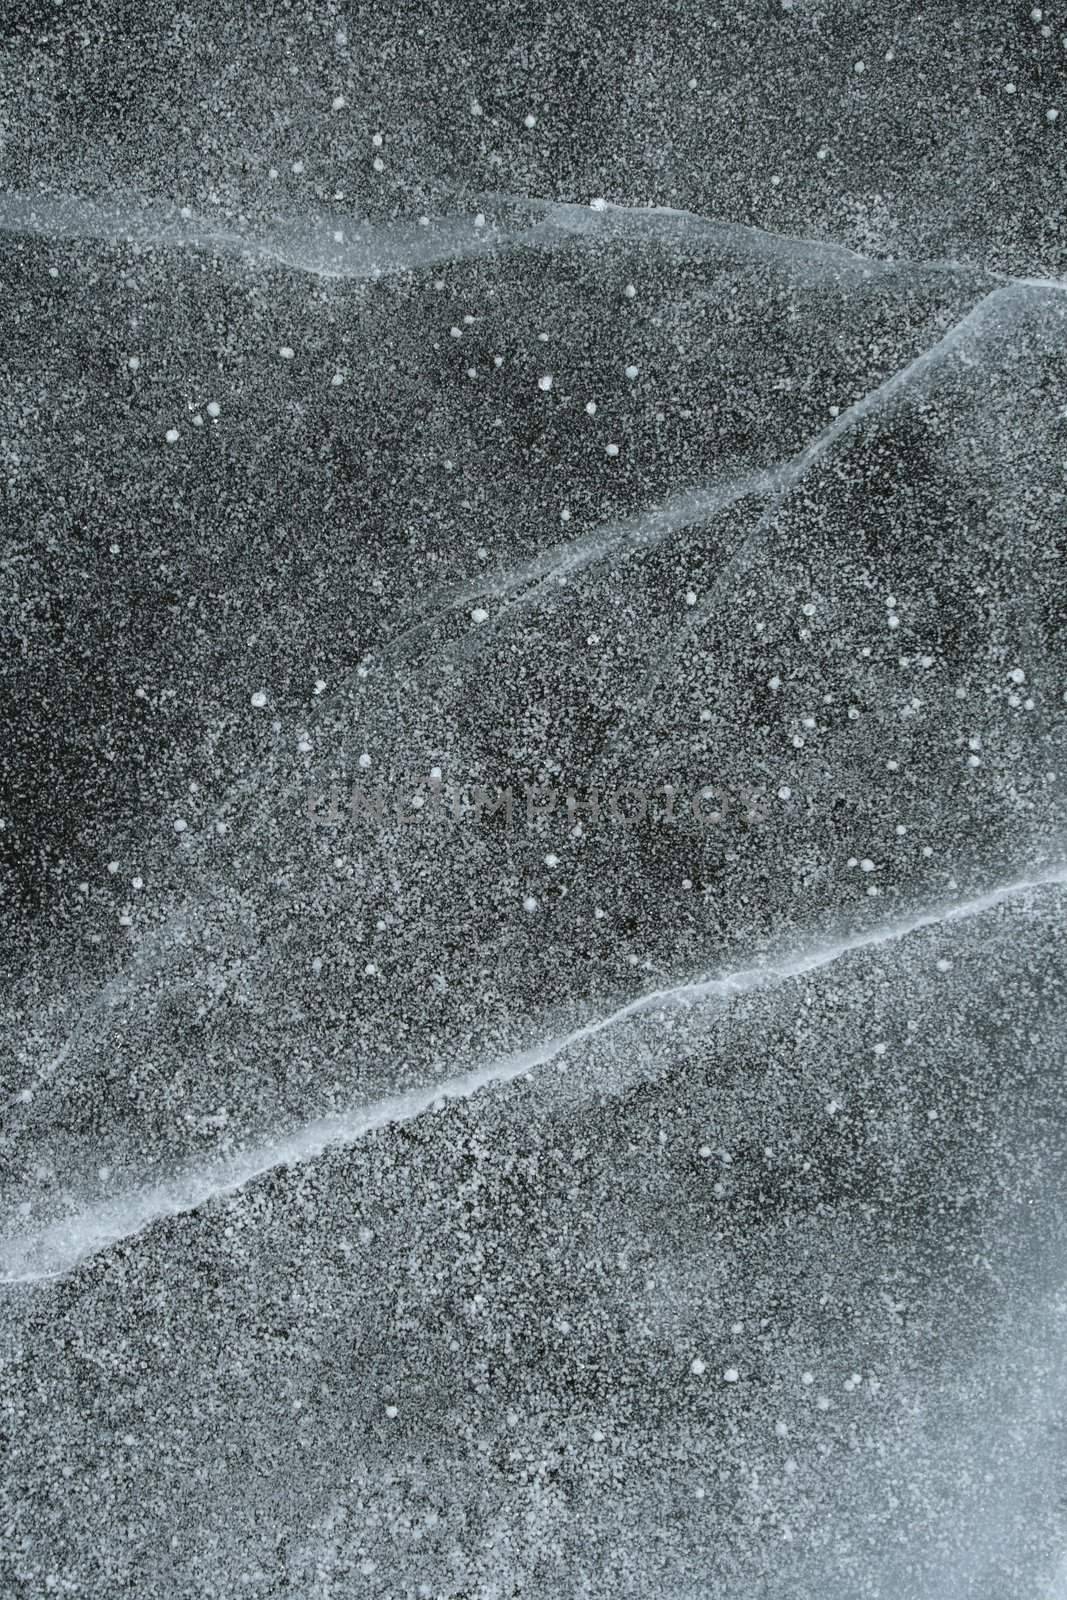 Grainy snow covering cracked ice by anikasalsera